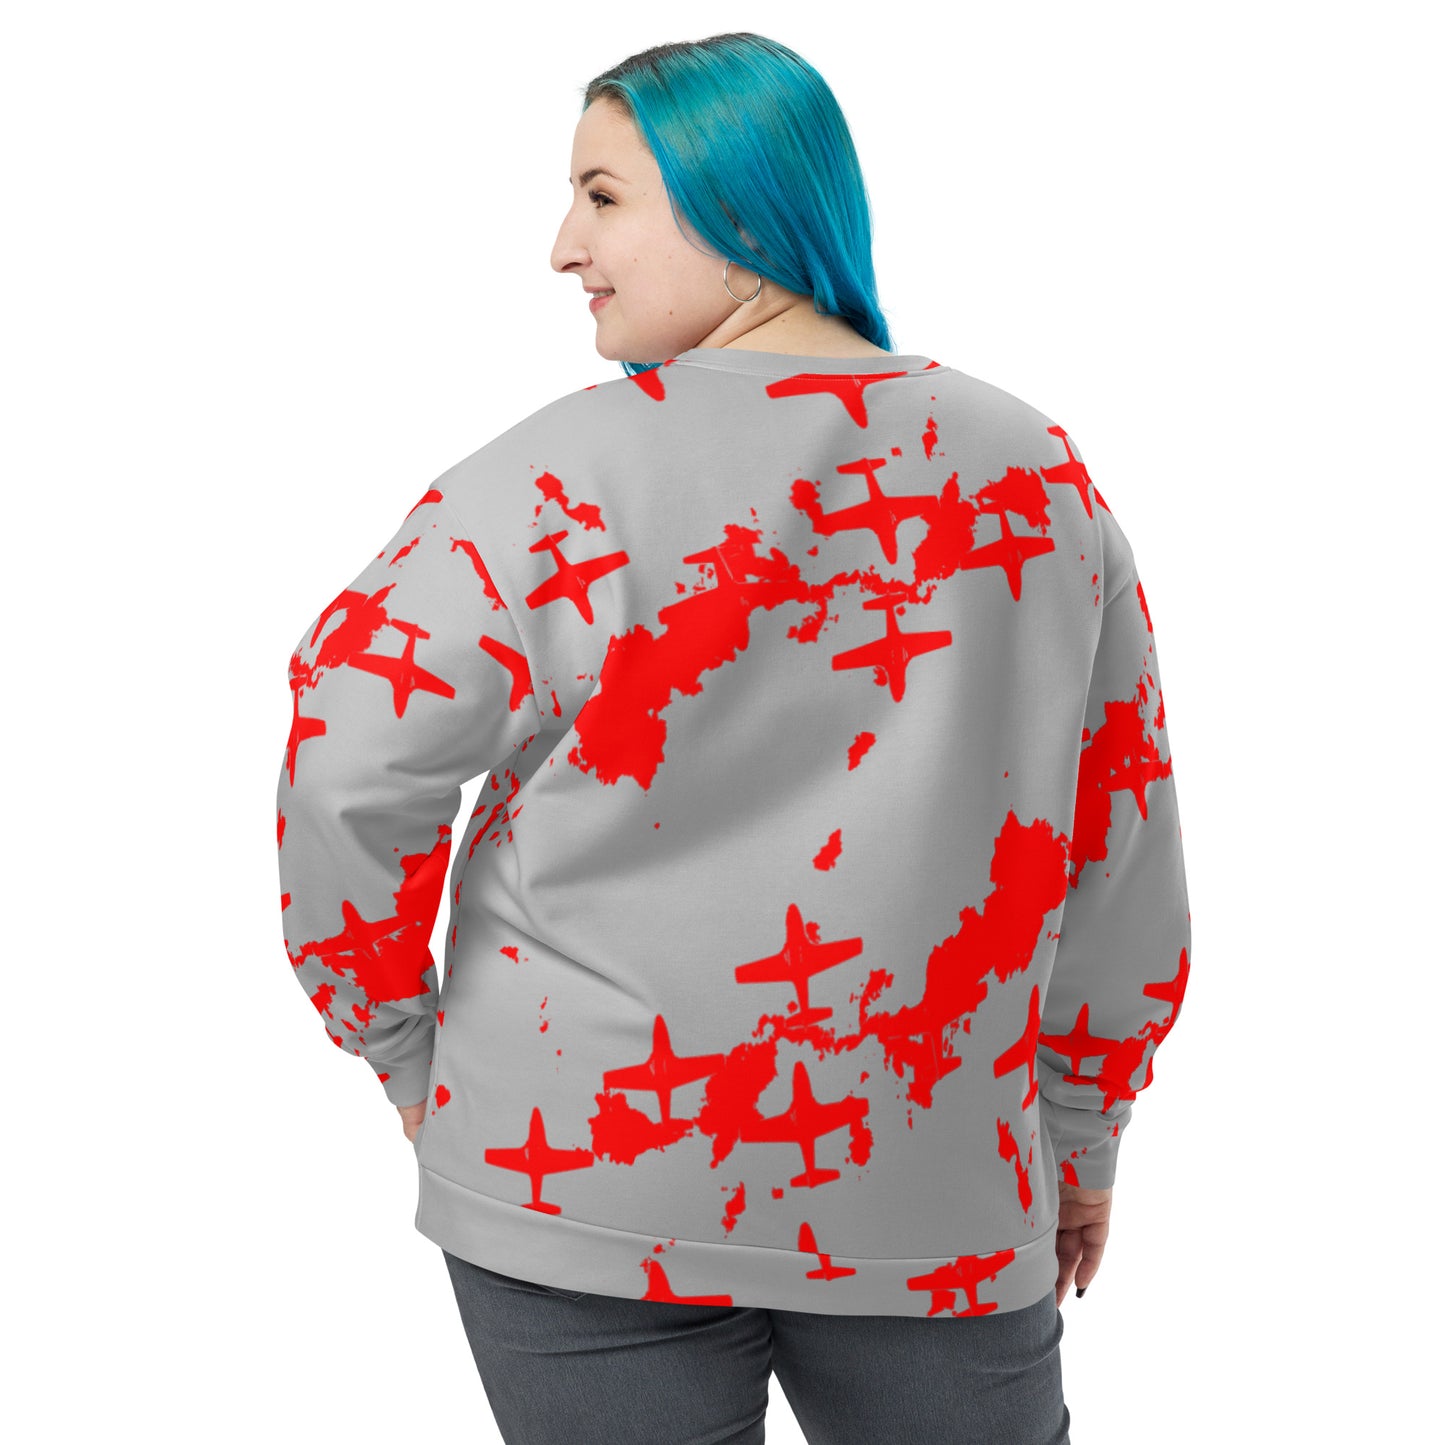 Fighter Plane Squadron Soft Cotton Brushed Fleece Unisex Sweatshirt